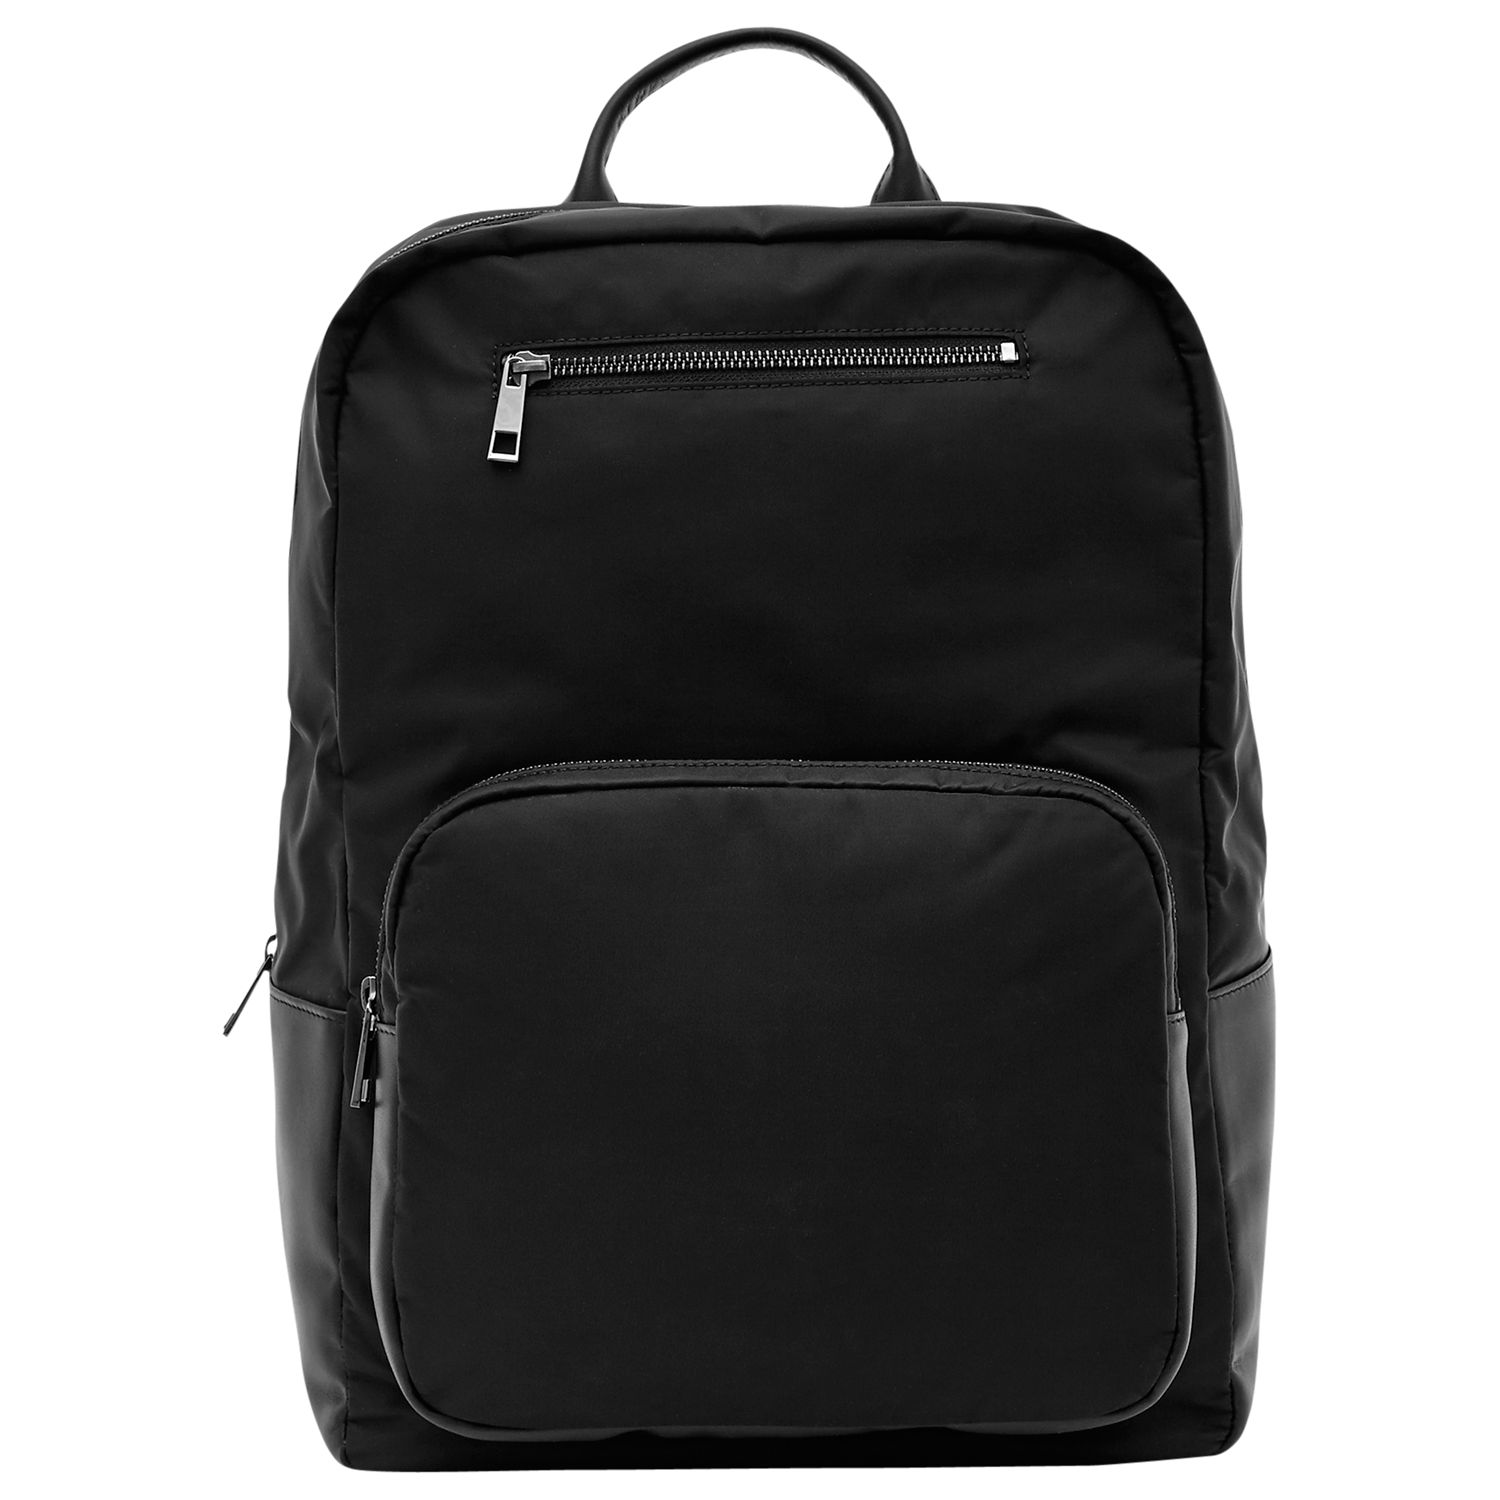 Reiss Penn Leather Trim Backpack, Black